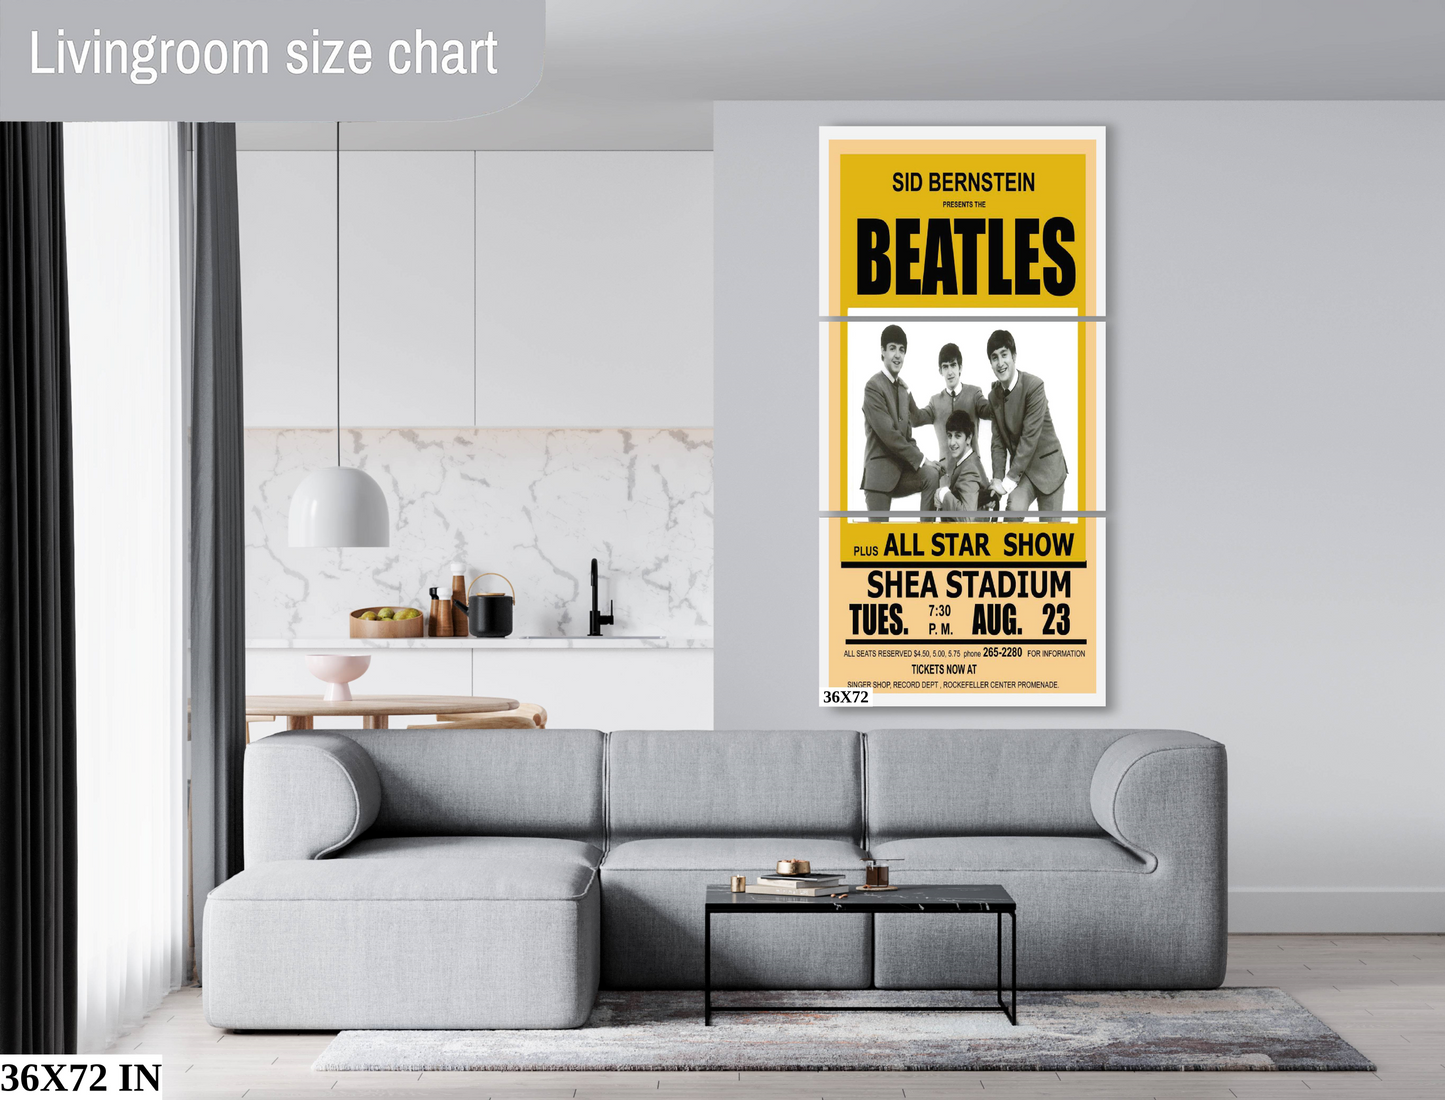 The Beatles at Shea Stadium 2 concert poster